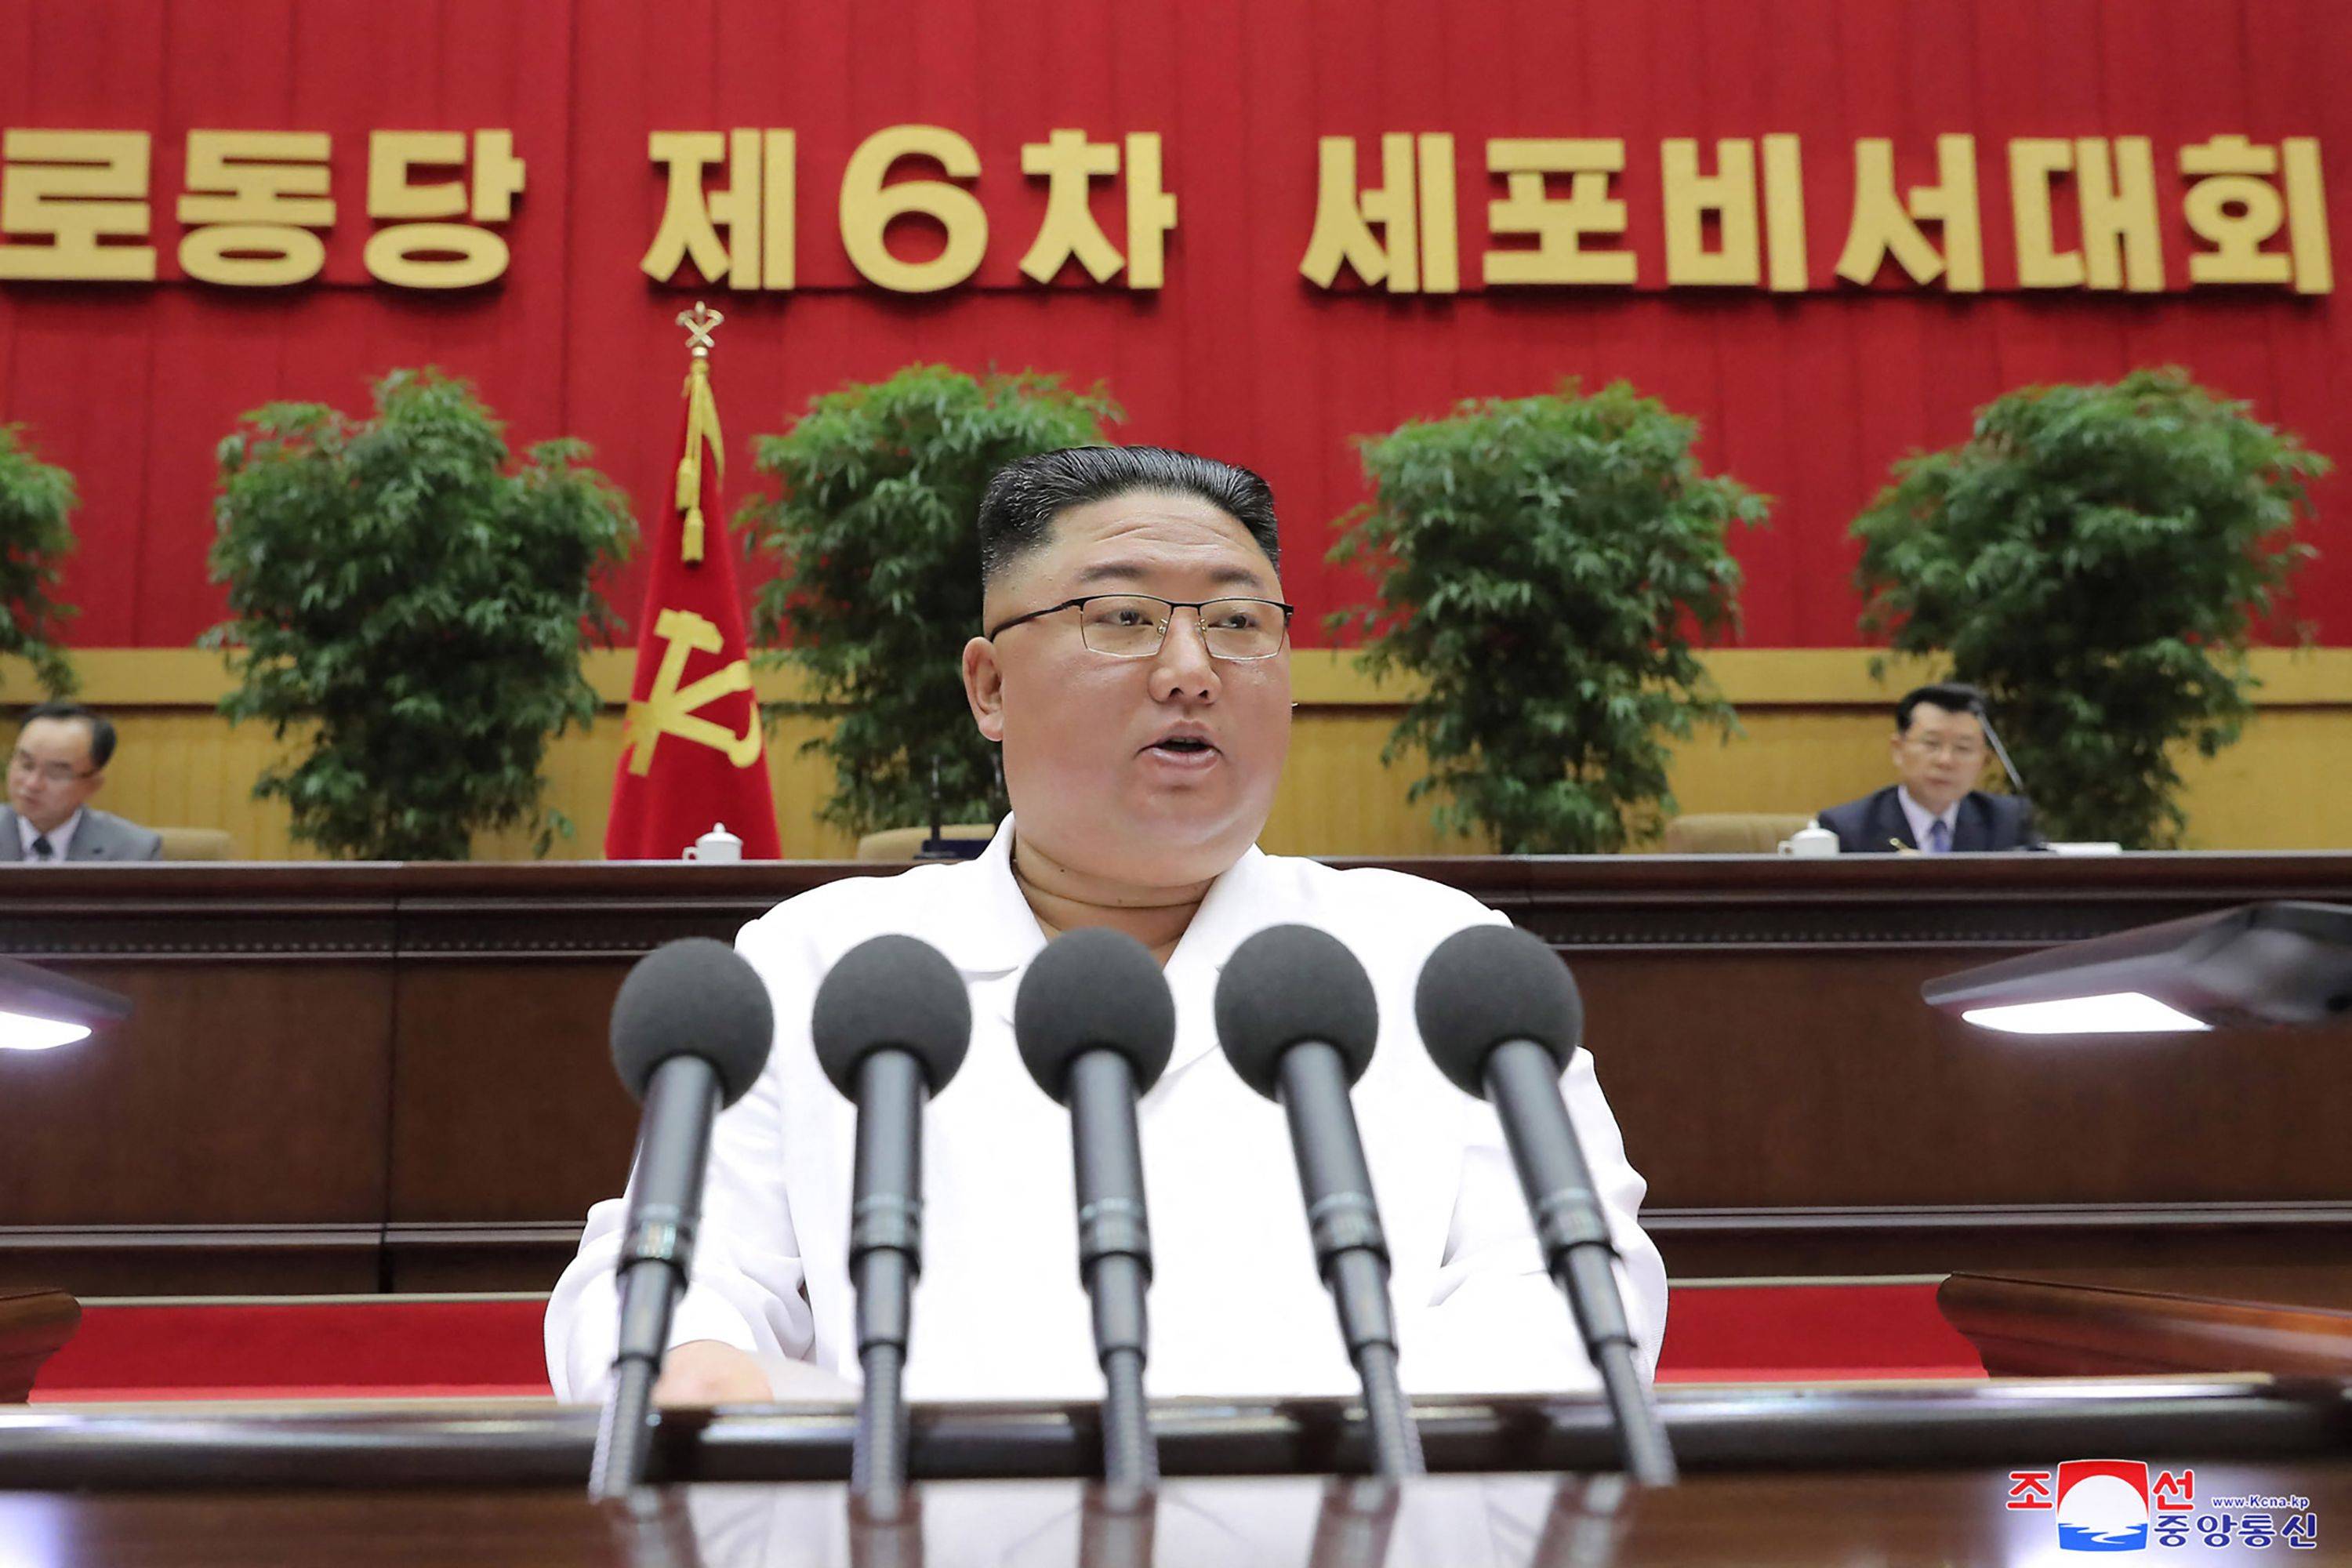 North Korean leader Kim Jong Un delivers a closing address at a political conference in Pyongyang on Thursday. | STR / KCNA / KNS / VIA AFP-JIJI